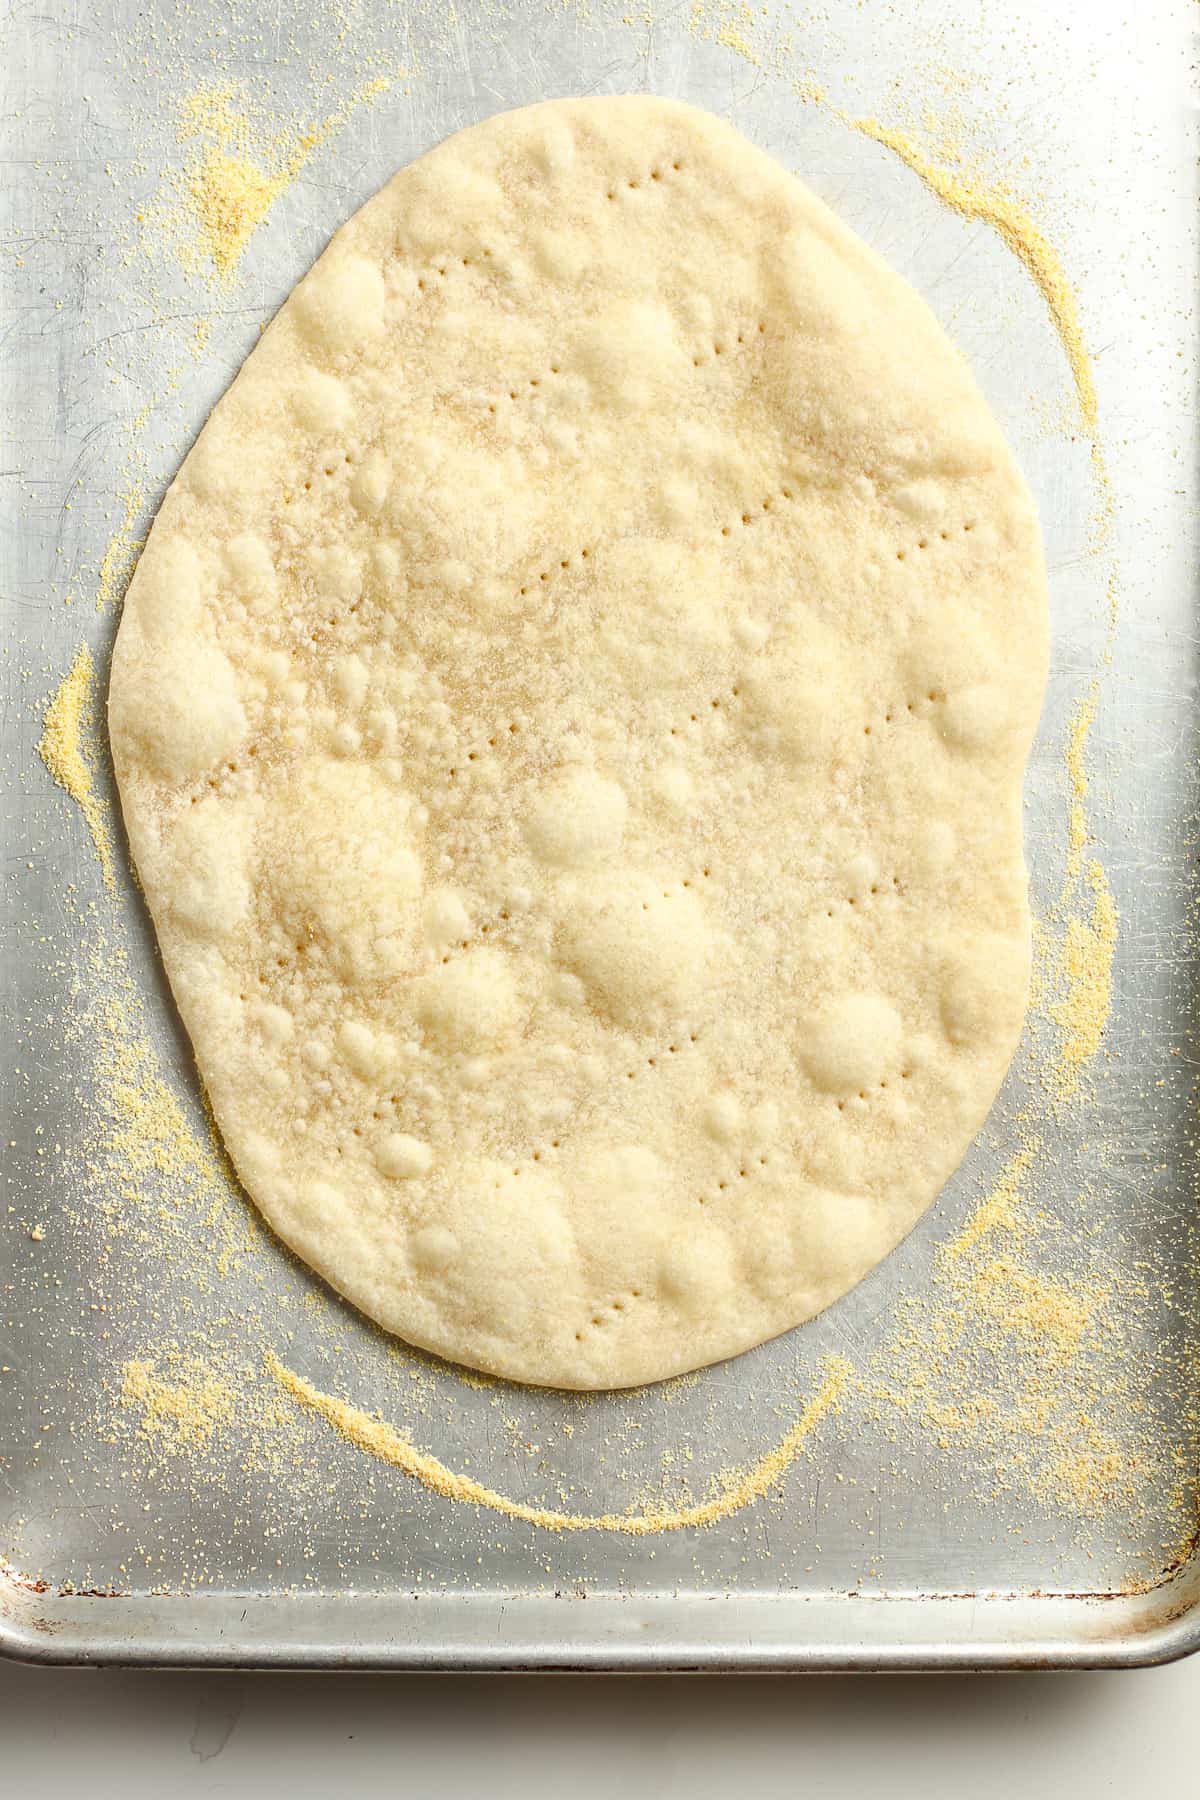 A par-baked flatbread pizza.